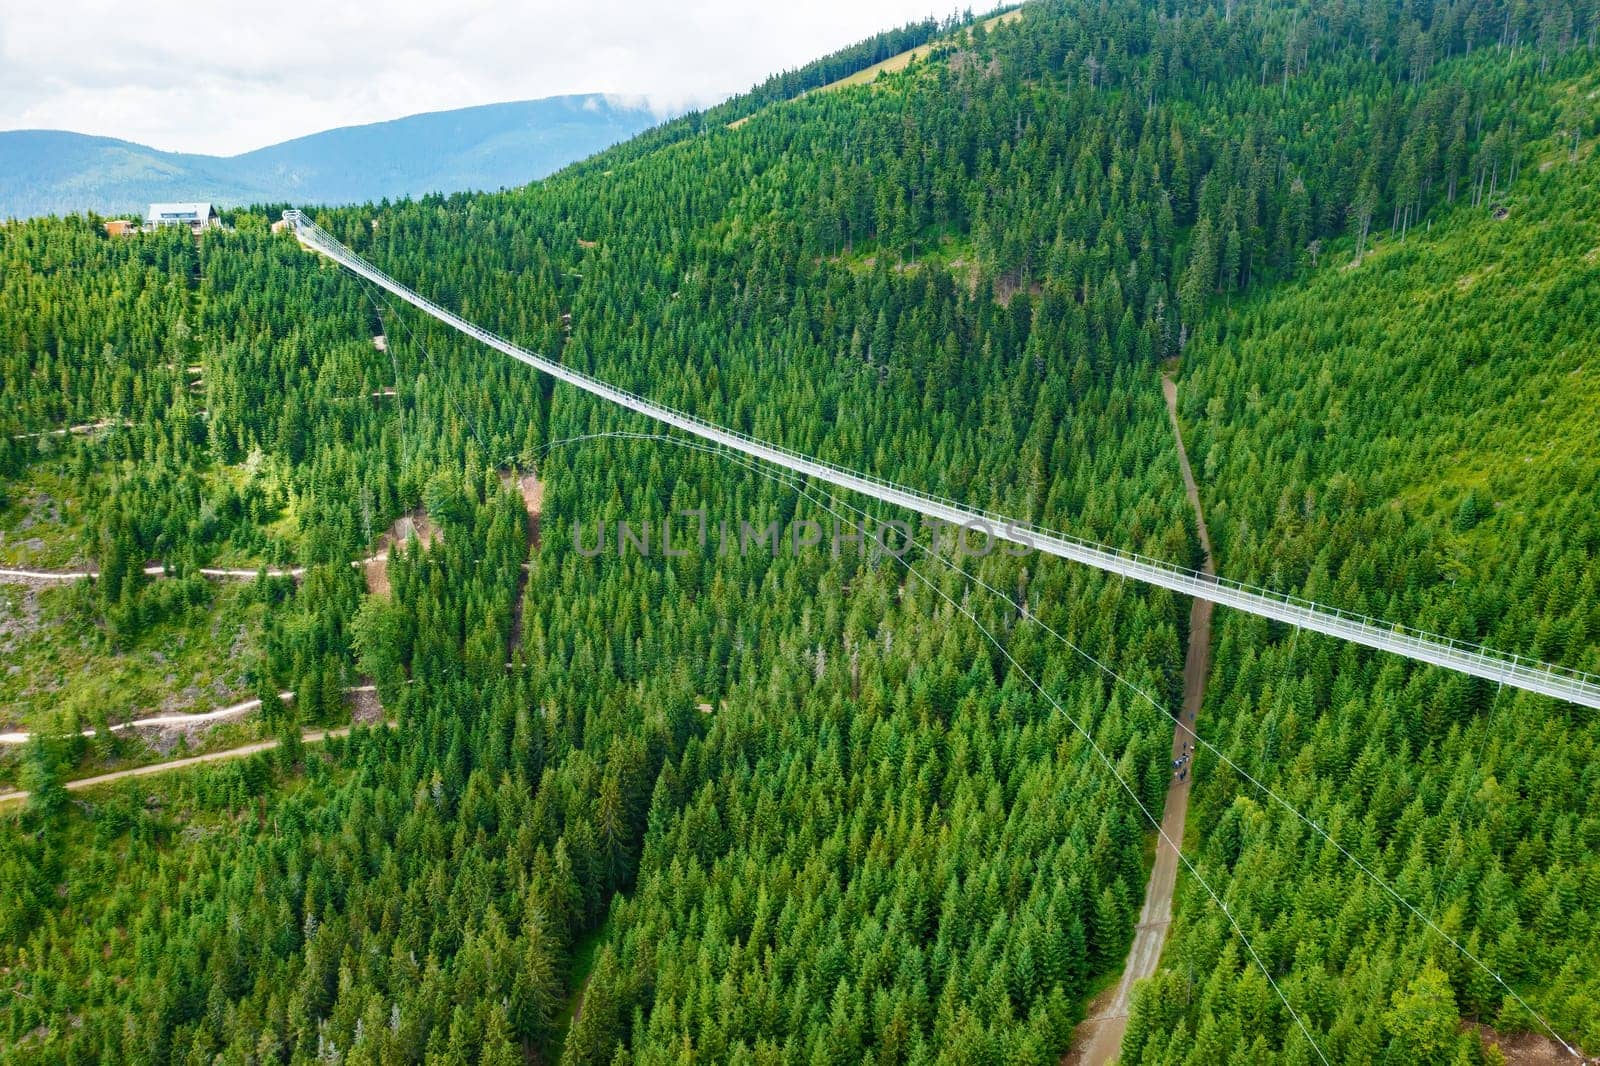 Sky Bridge 721 is the longest suspension bridge between two hills in the forest by vladimka